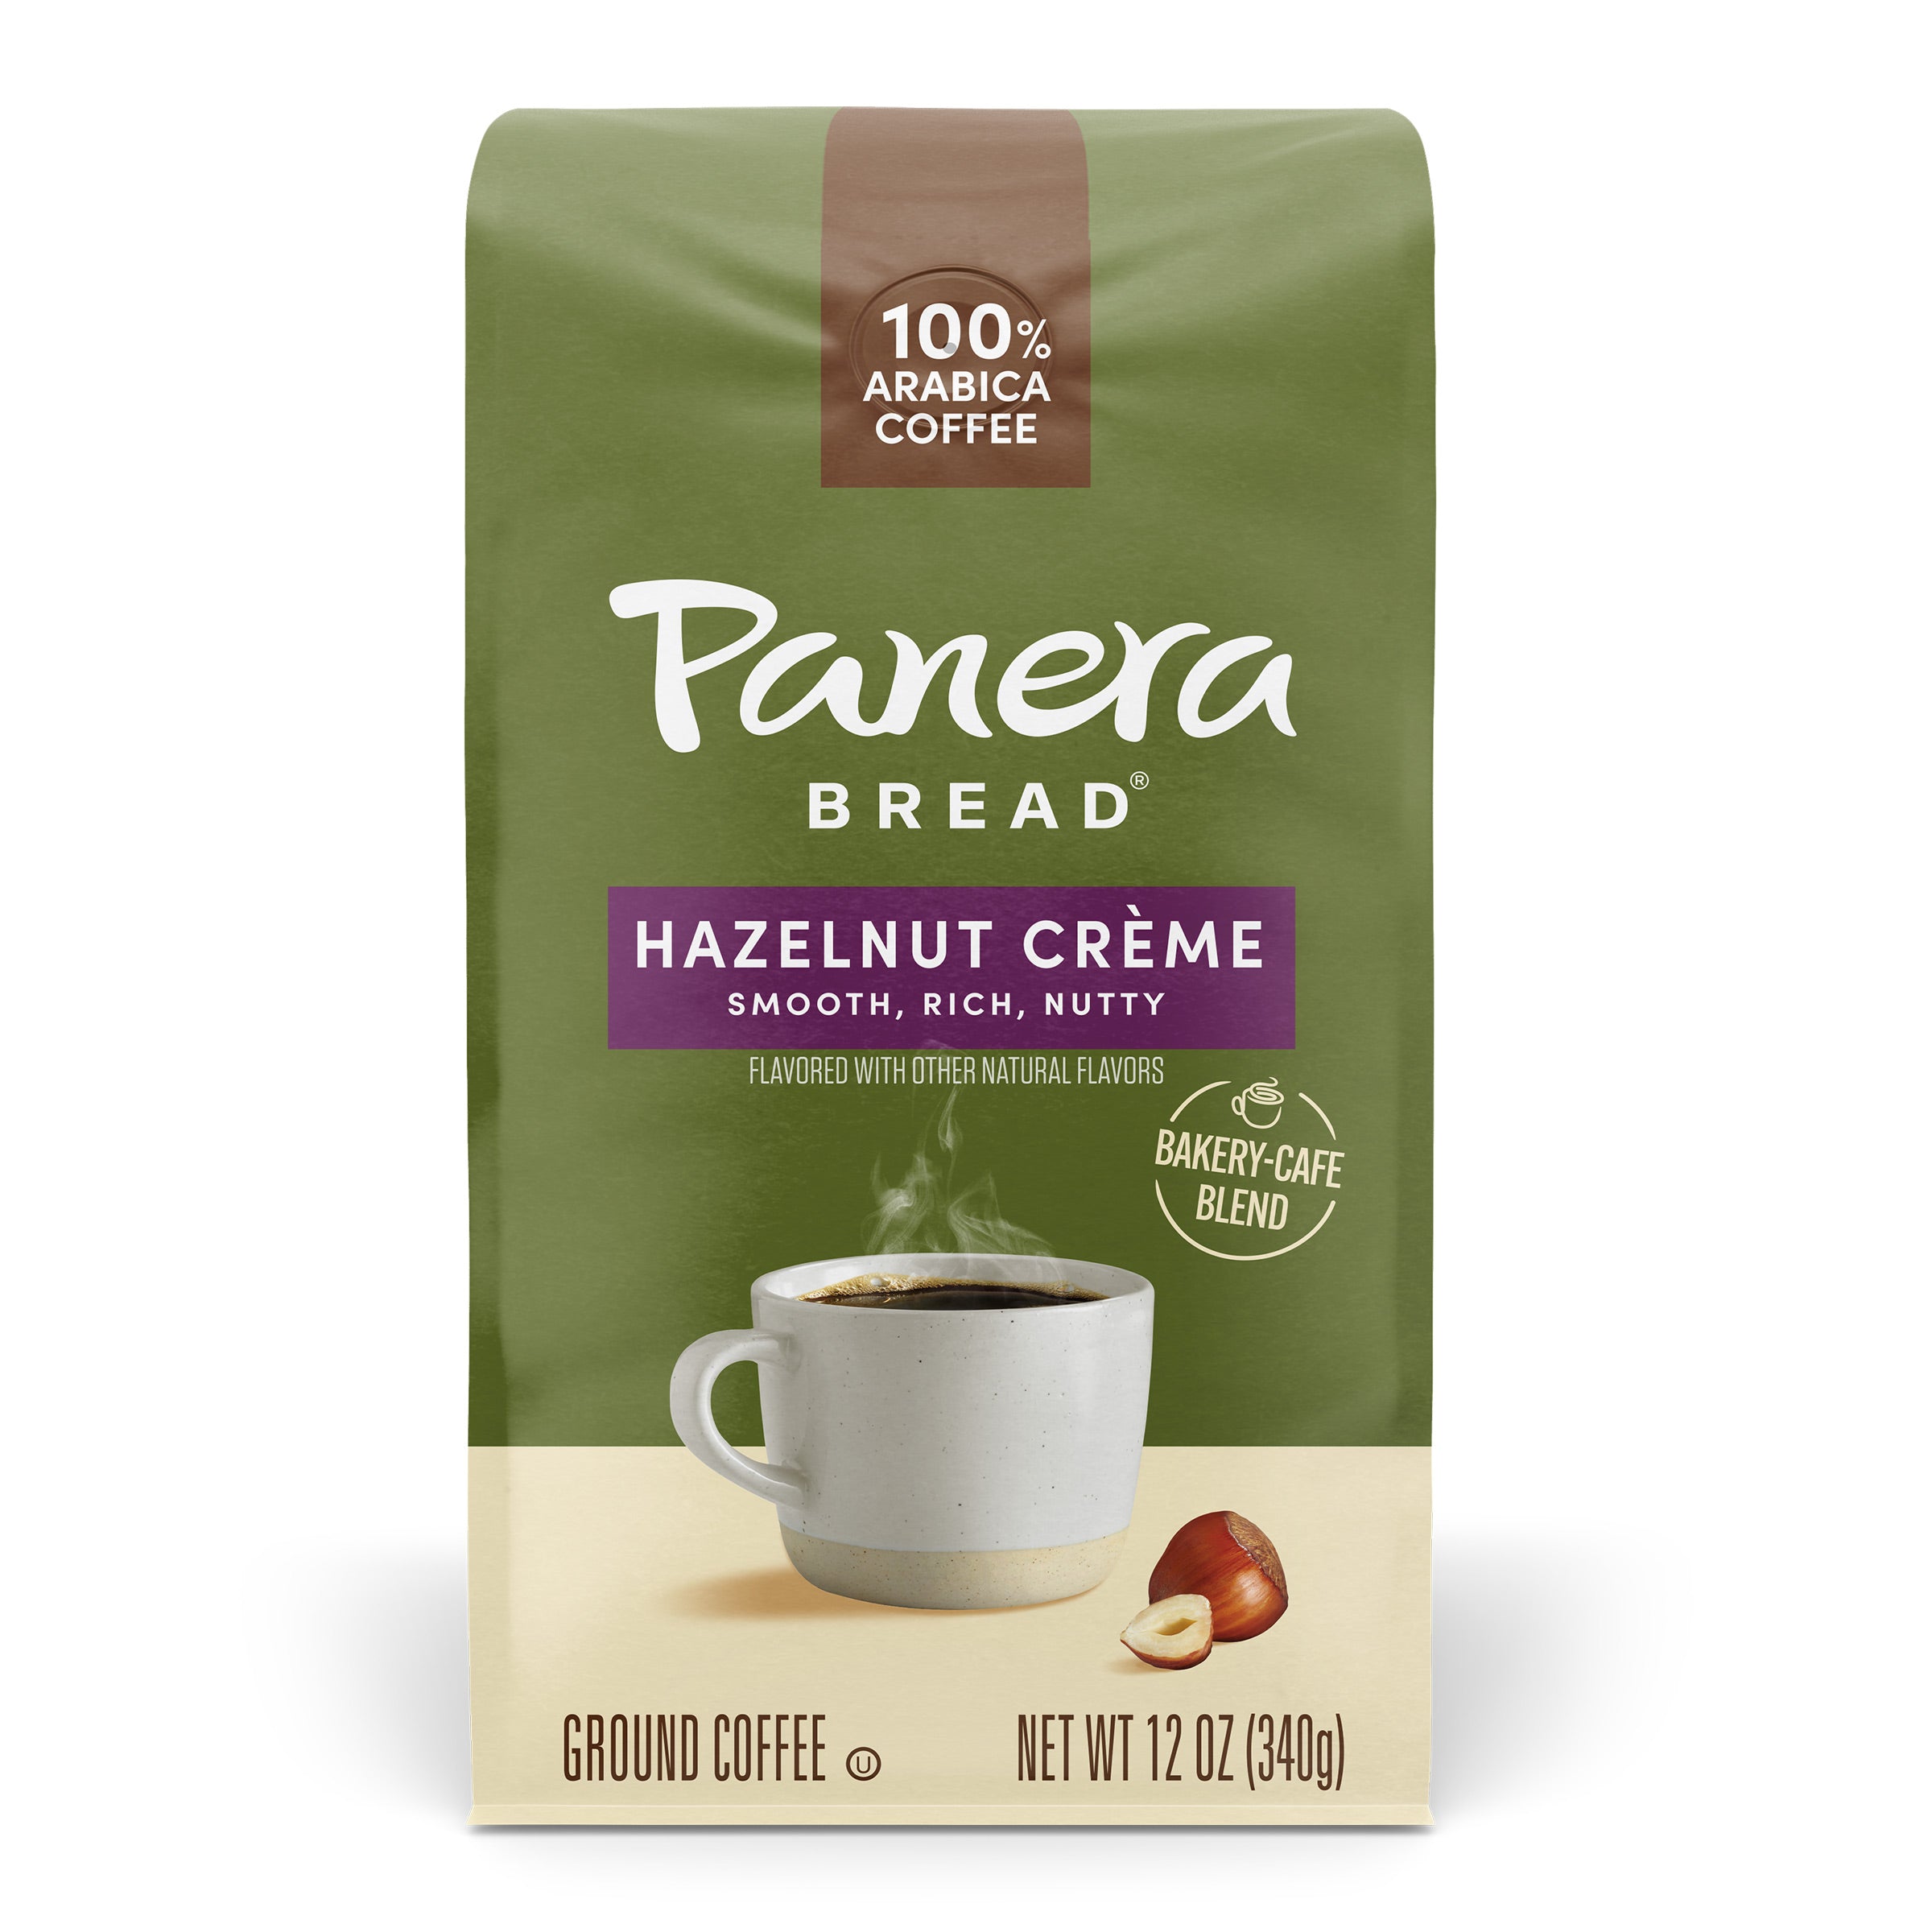 Natural Hazelnut, Flavored Espresso Pods